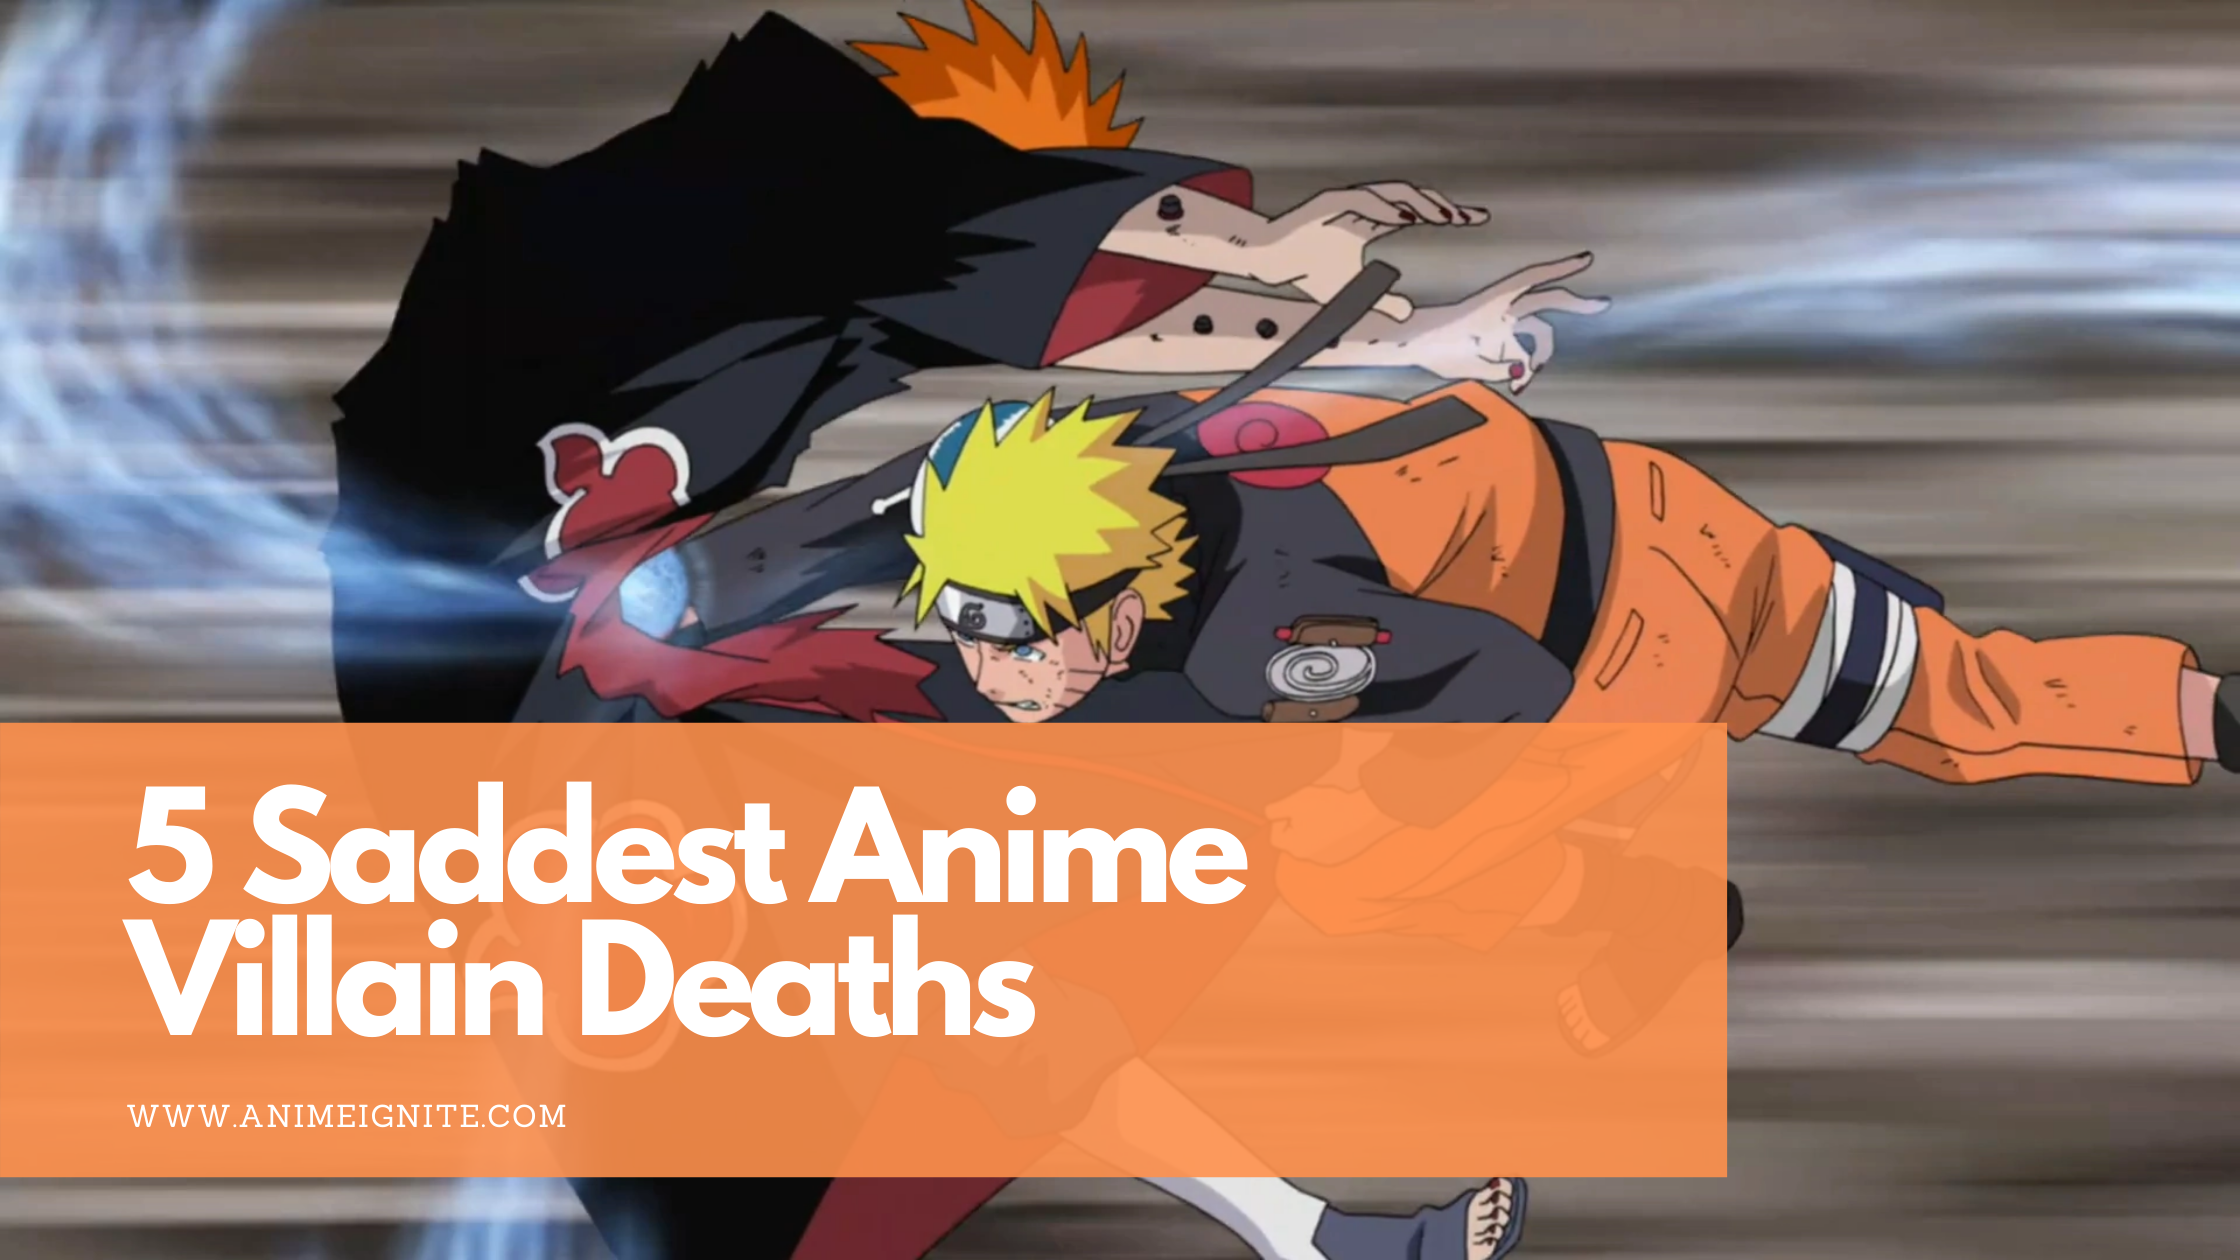 Top 5 Saddest Anime Villains Deaths Ever